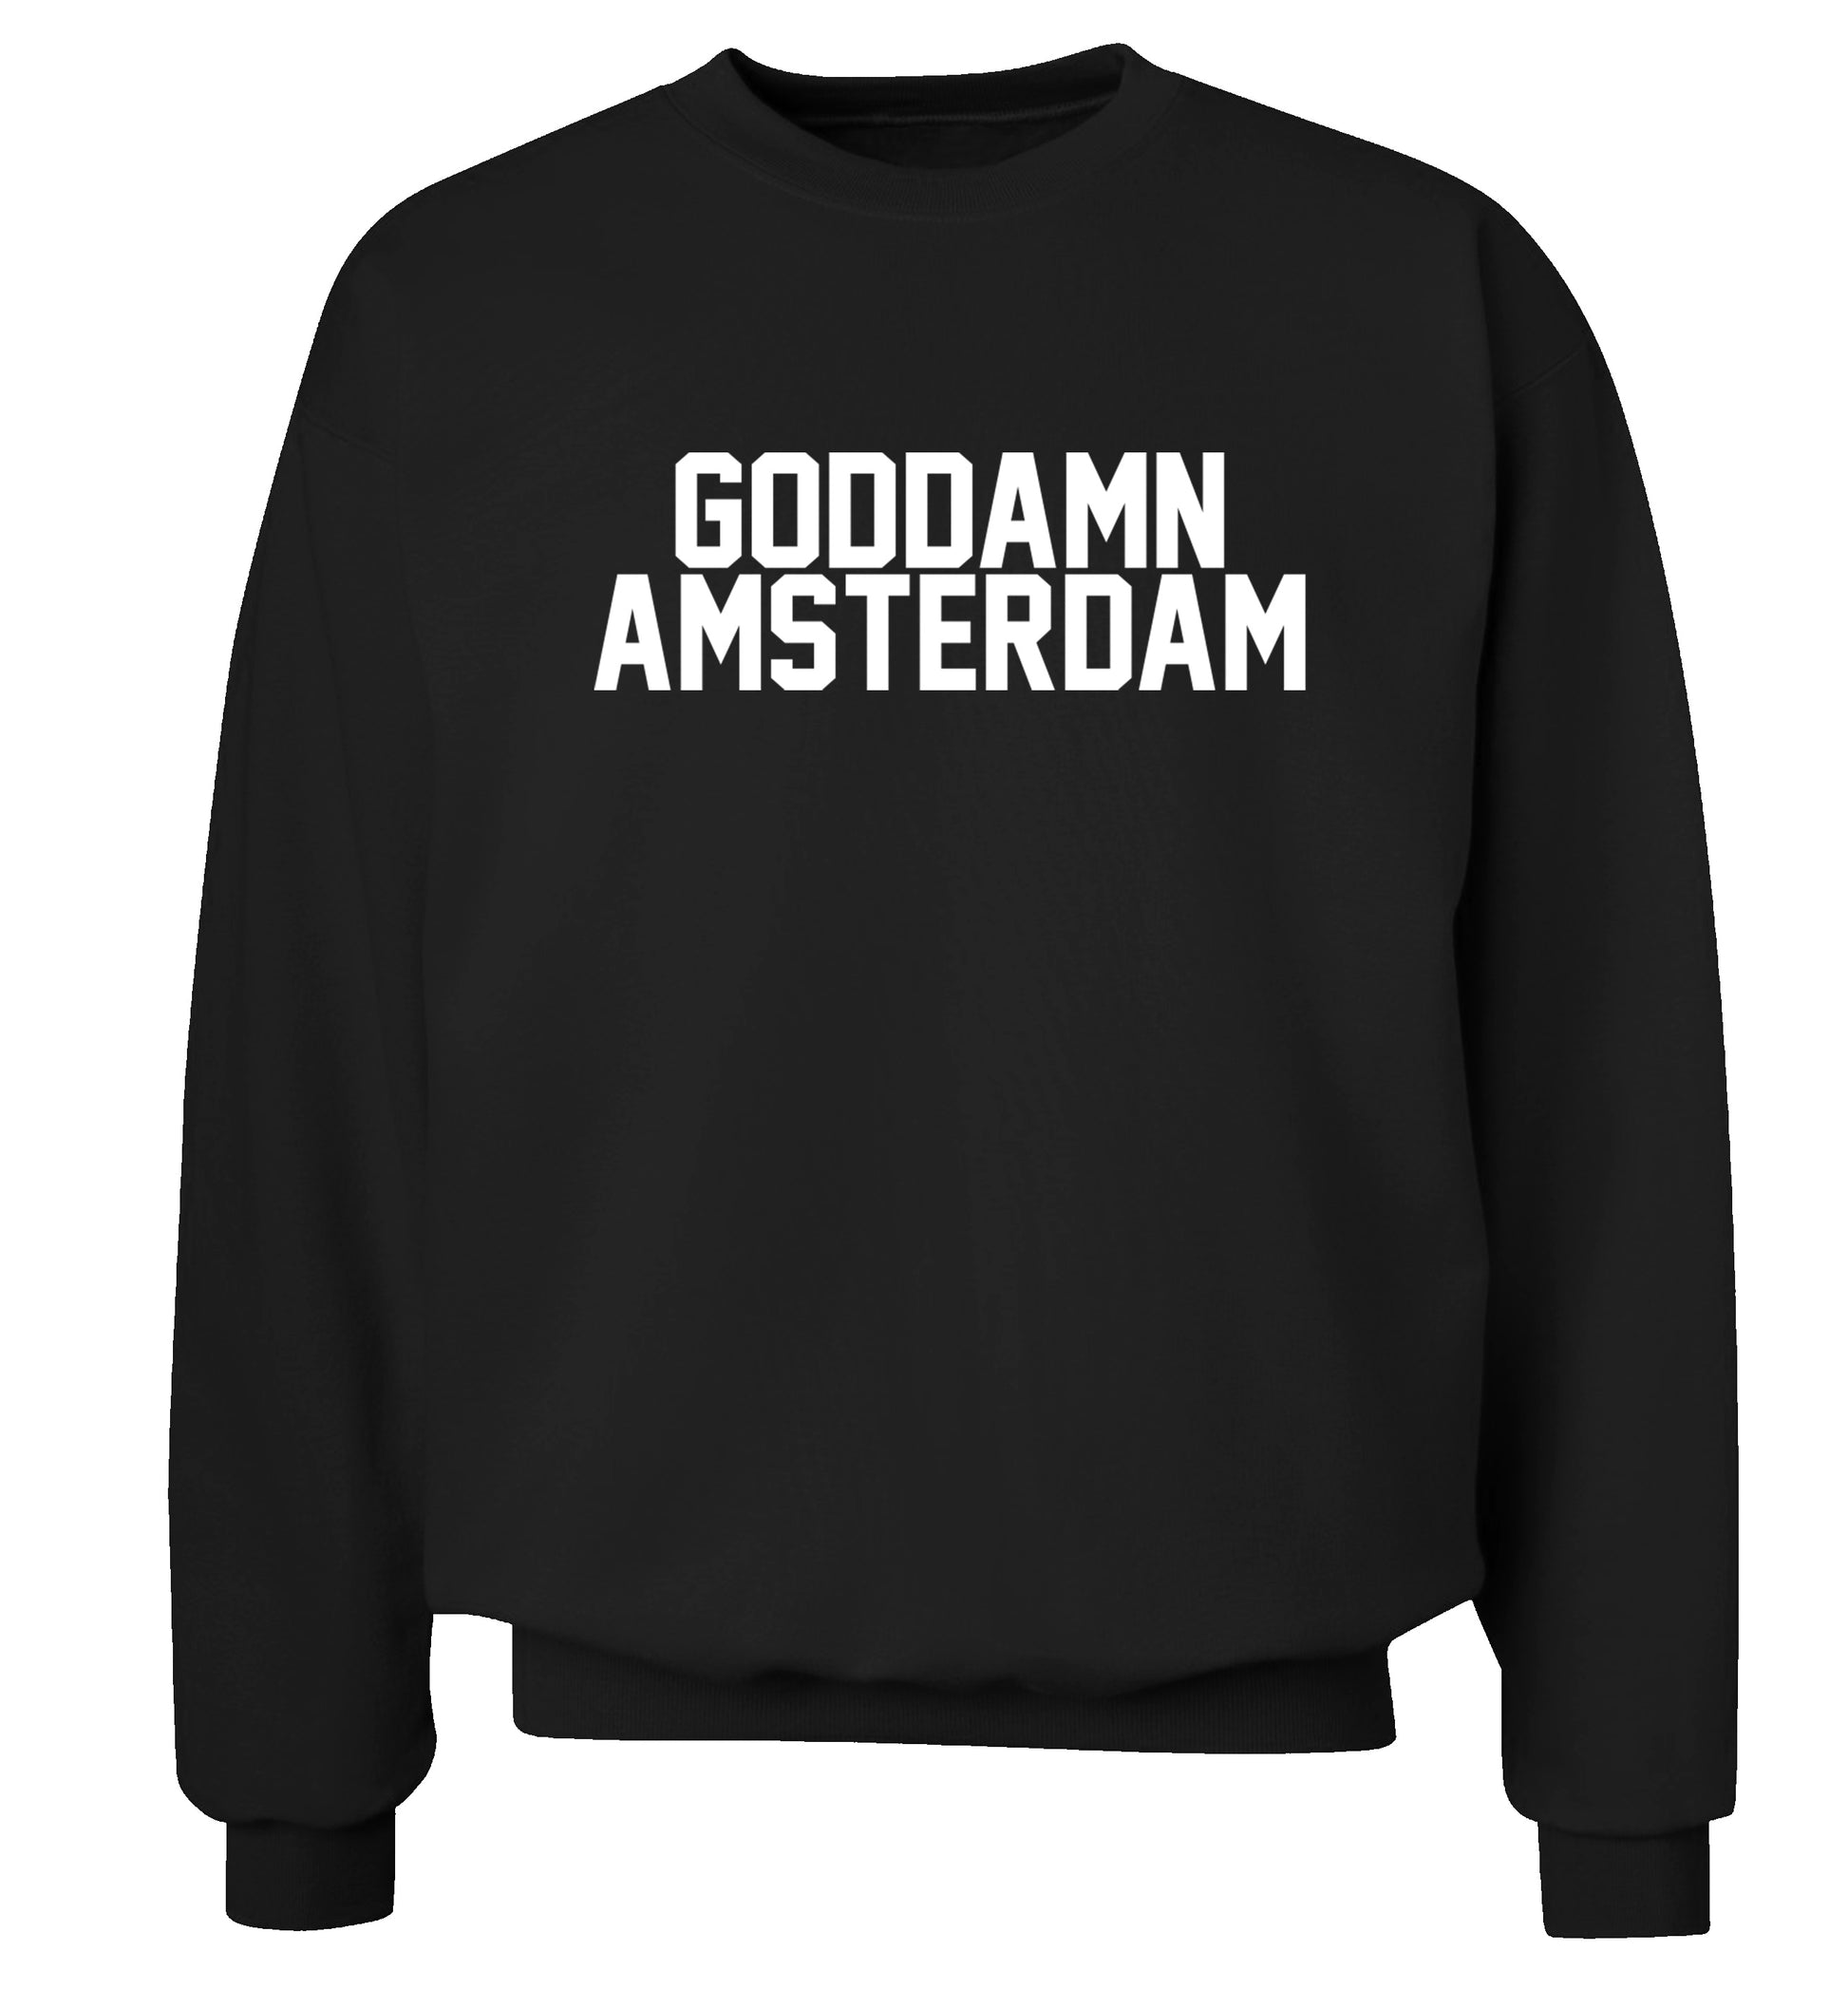 Goddamn Amsterdam Adult's unisex black Sweater 2XL